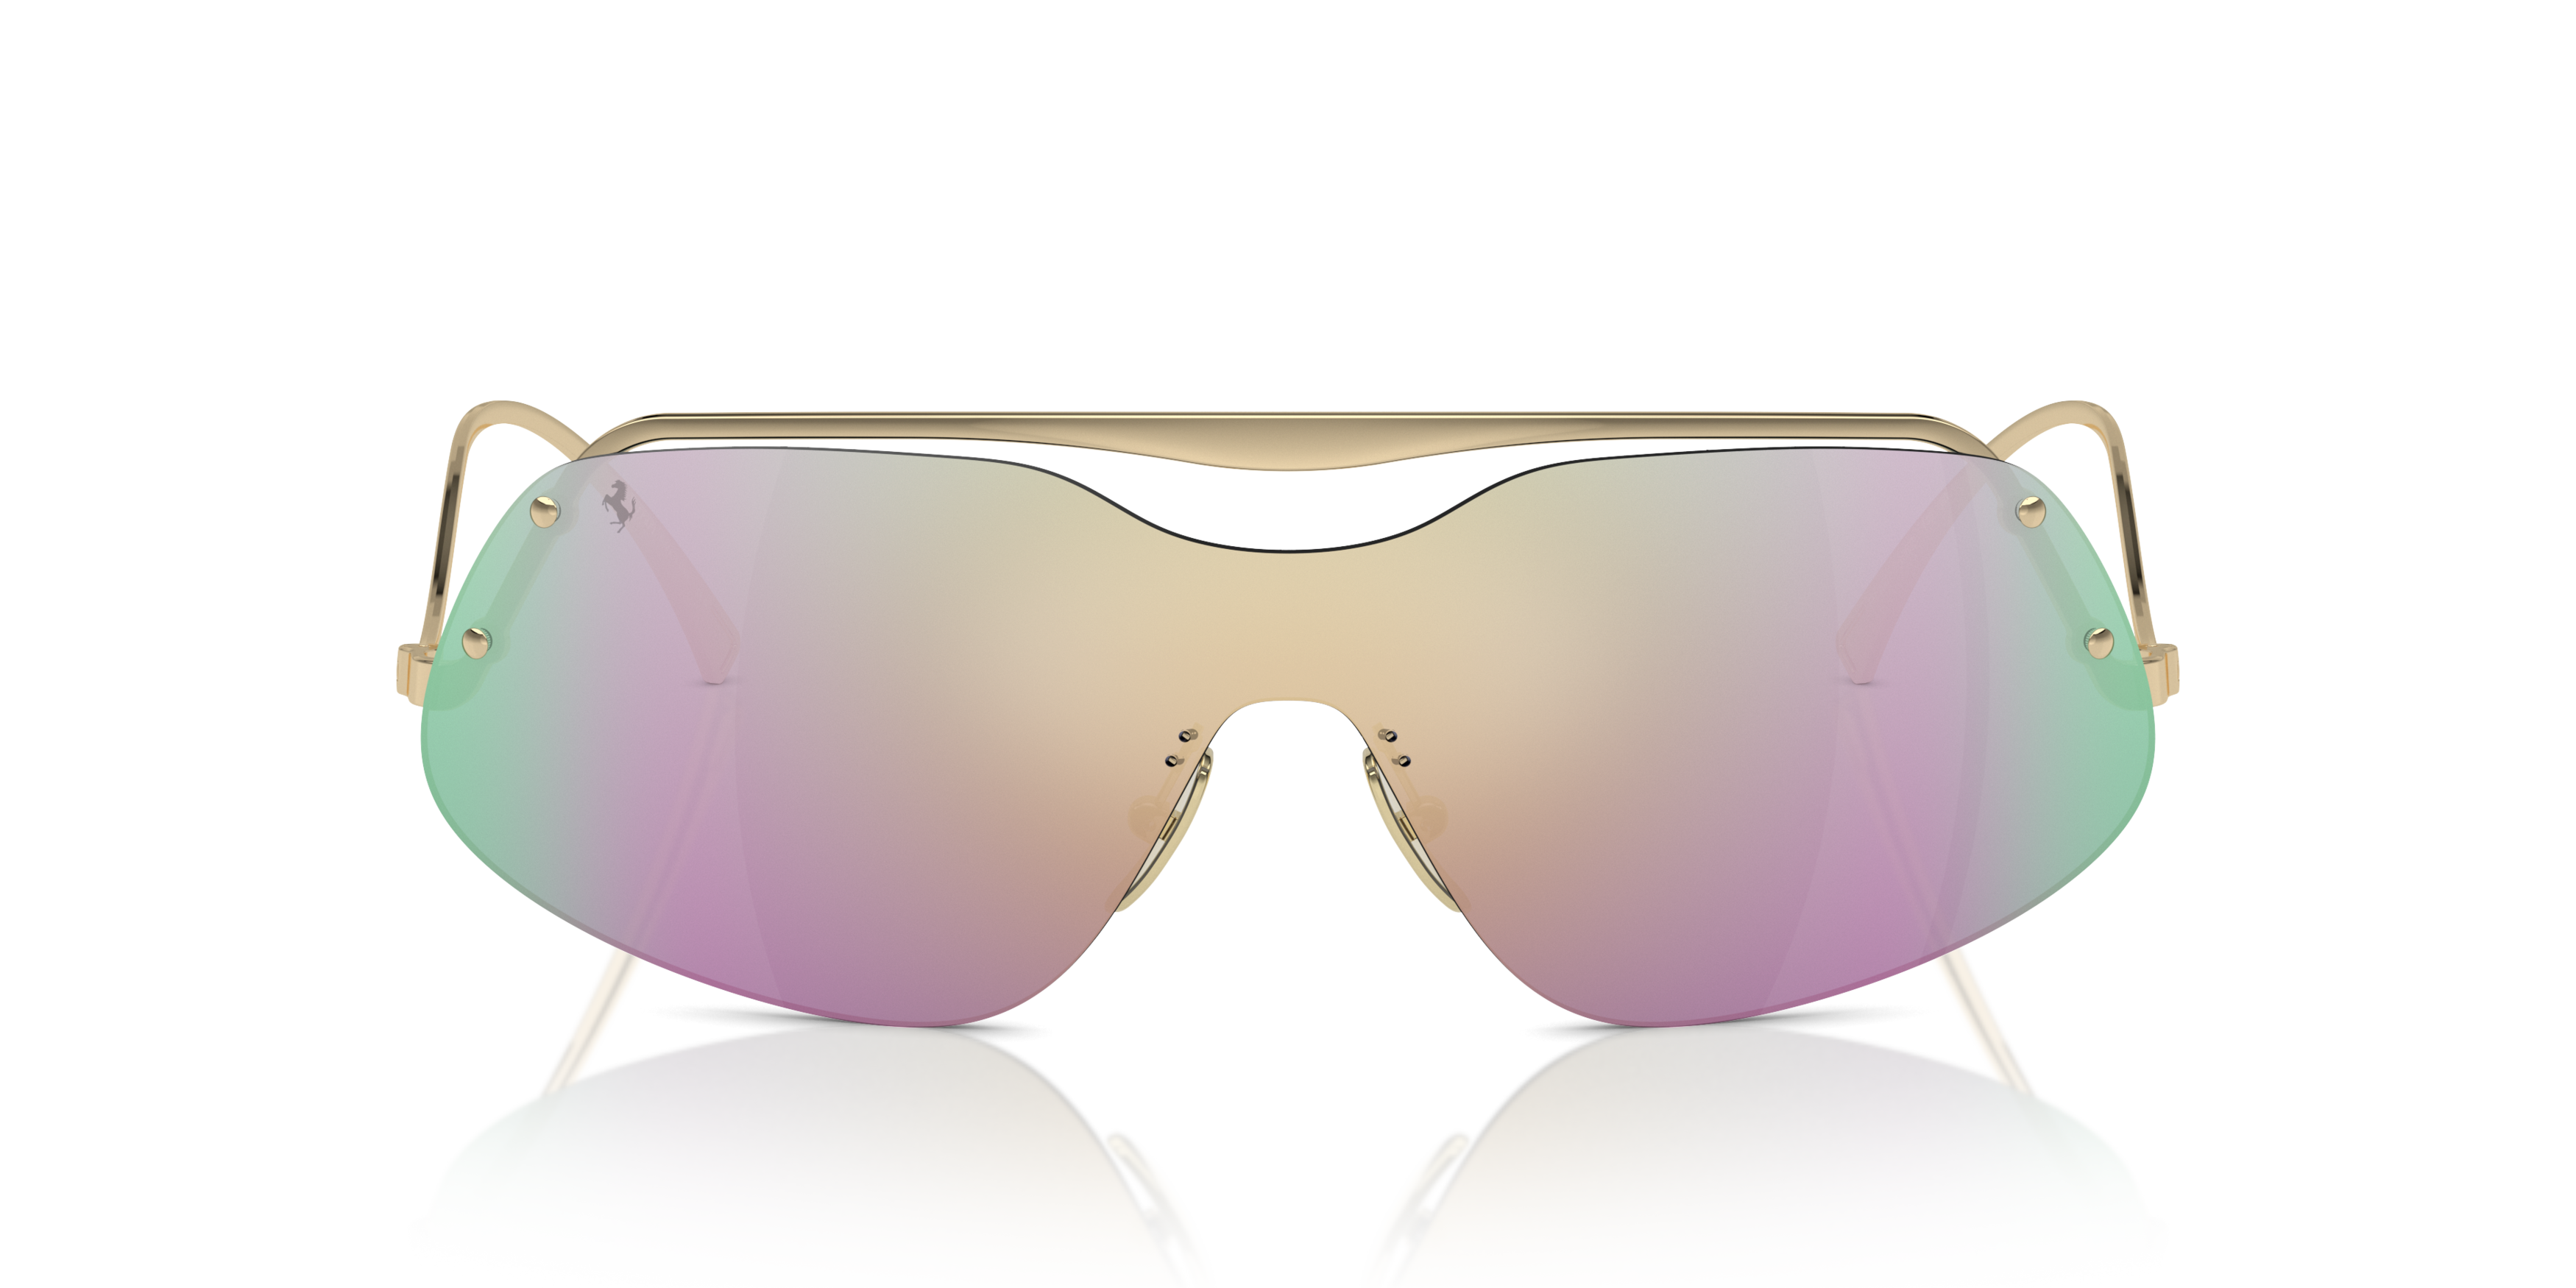 [products.image.front] Ferrari Cavallino FH1007 Sunglasses